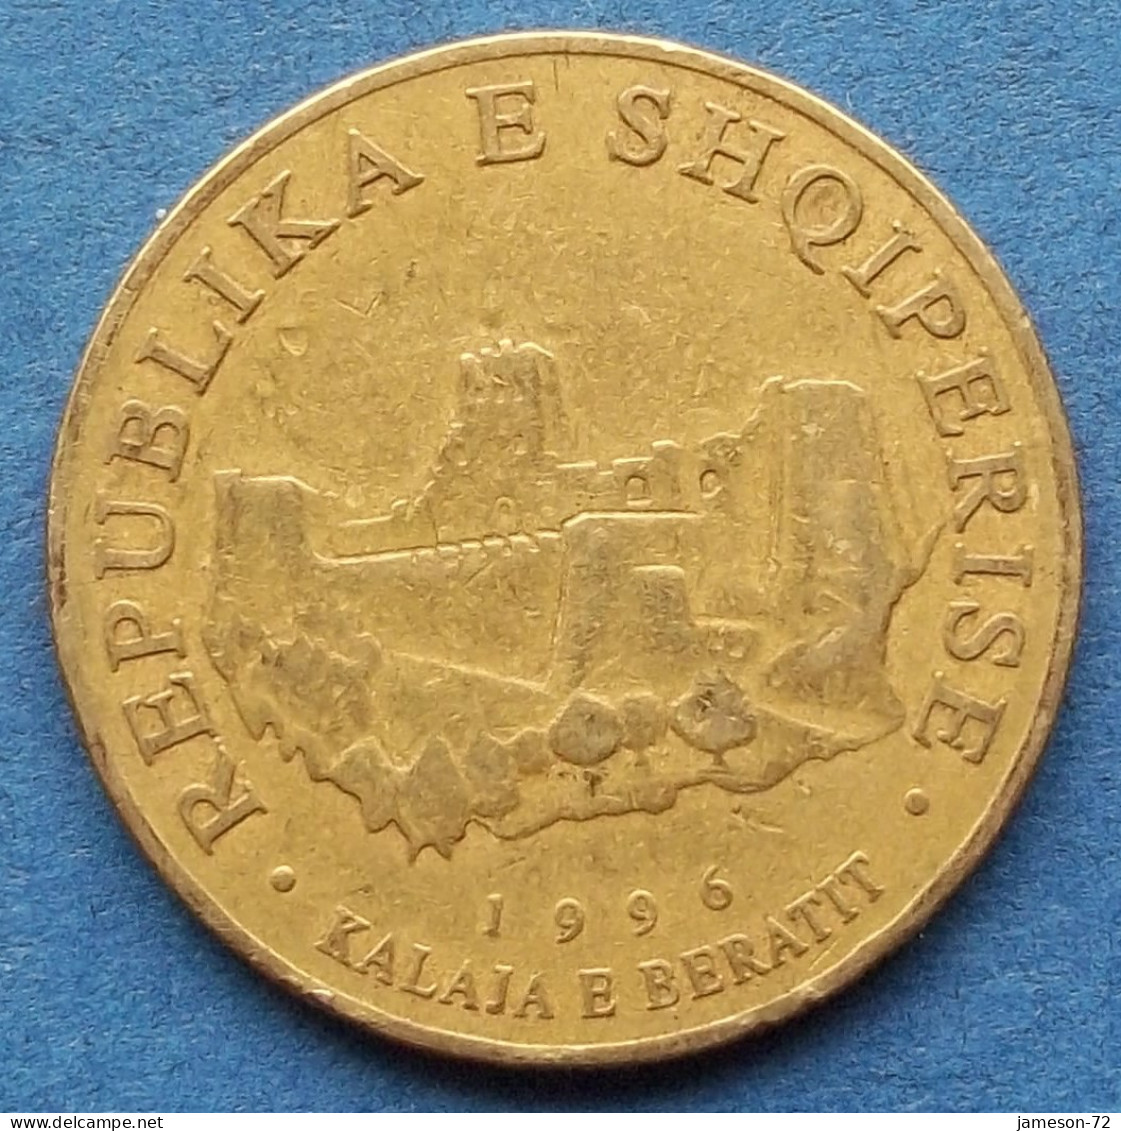 ALBANIA - 10 Leke 1996 "Berat Castle" KM# 77 Republic (1996) - Edelweiss Coins - Albania